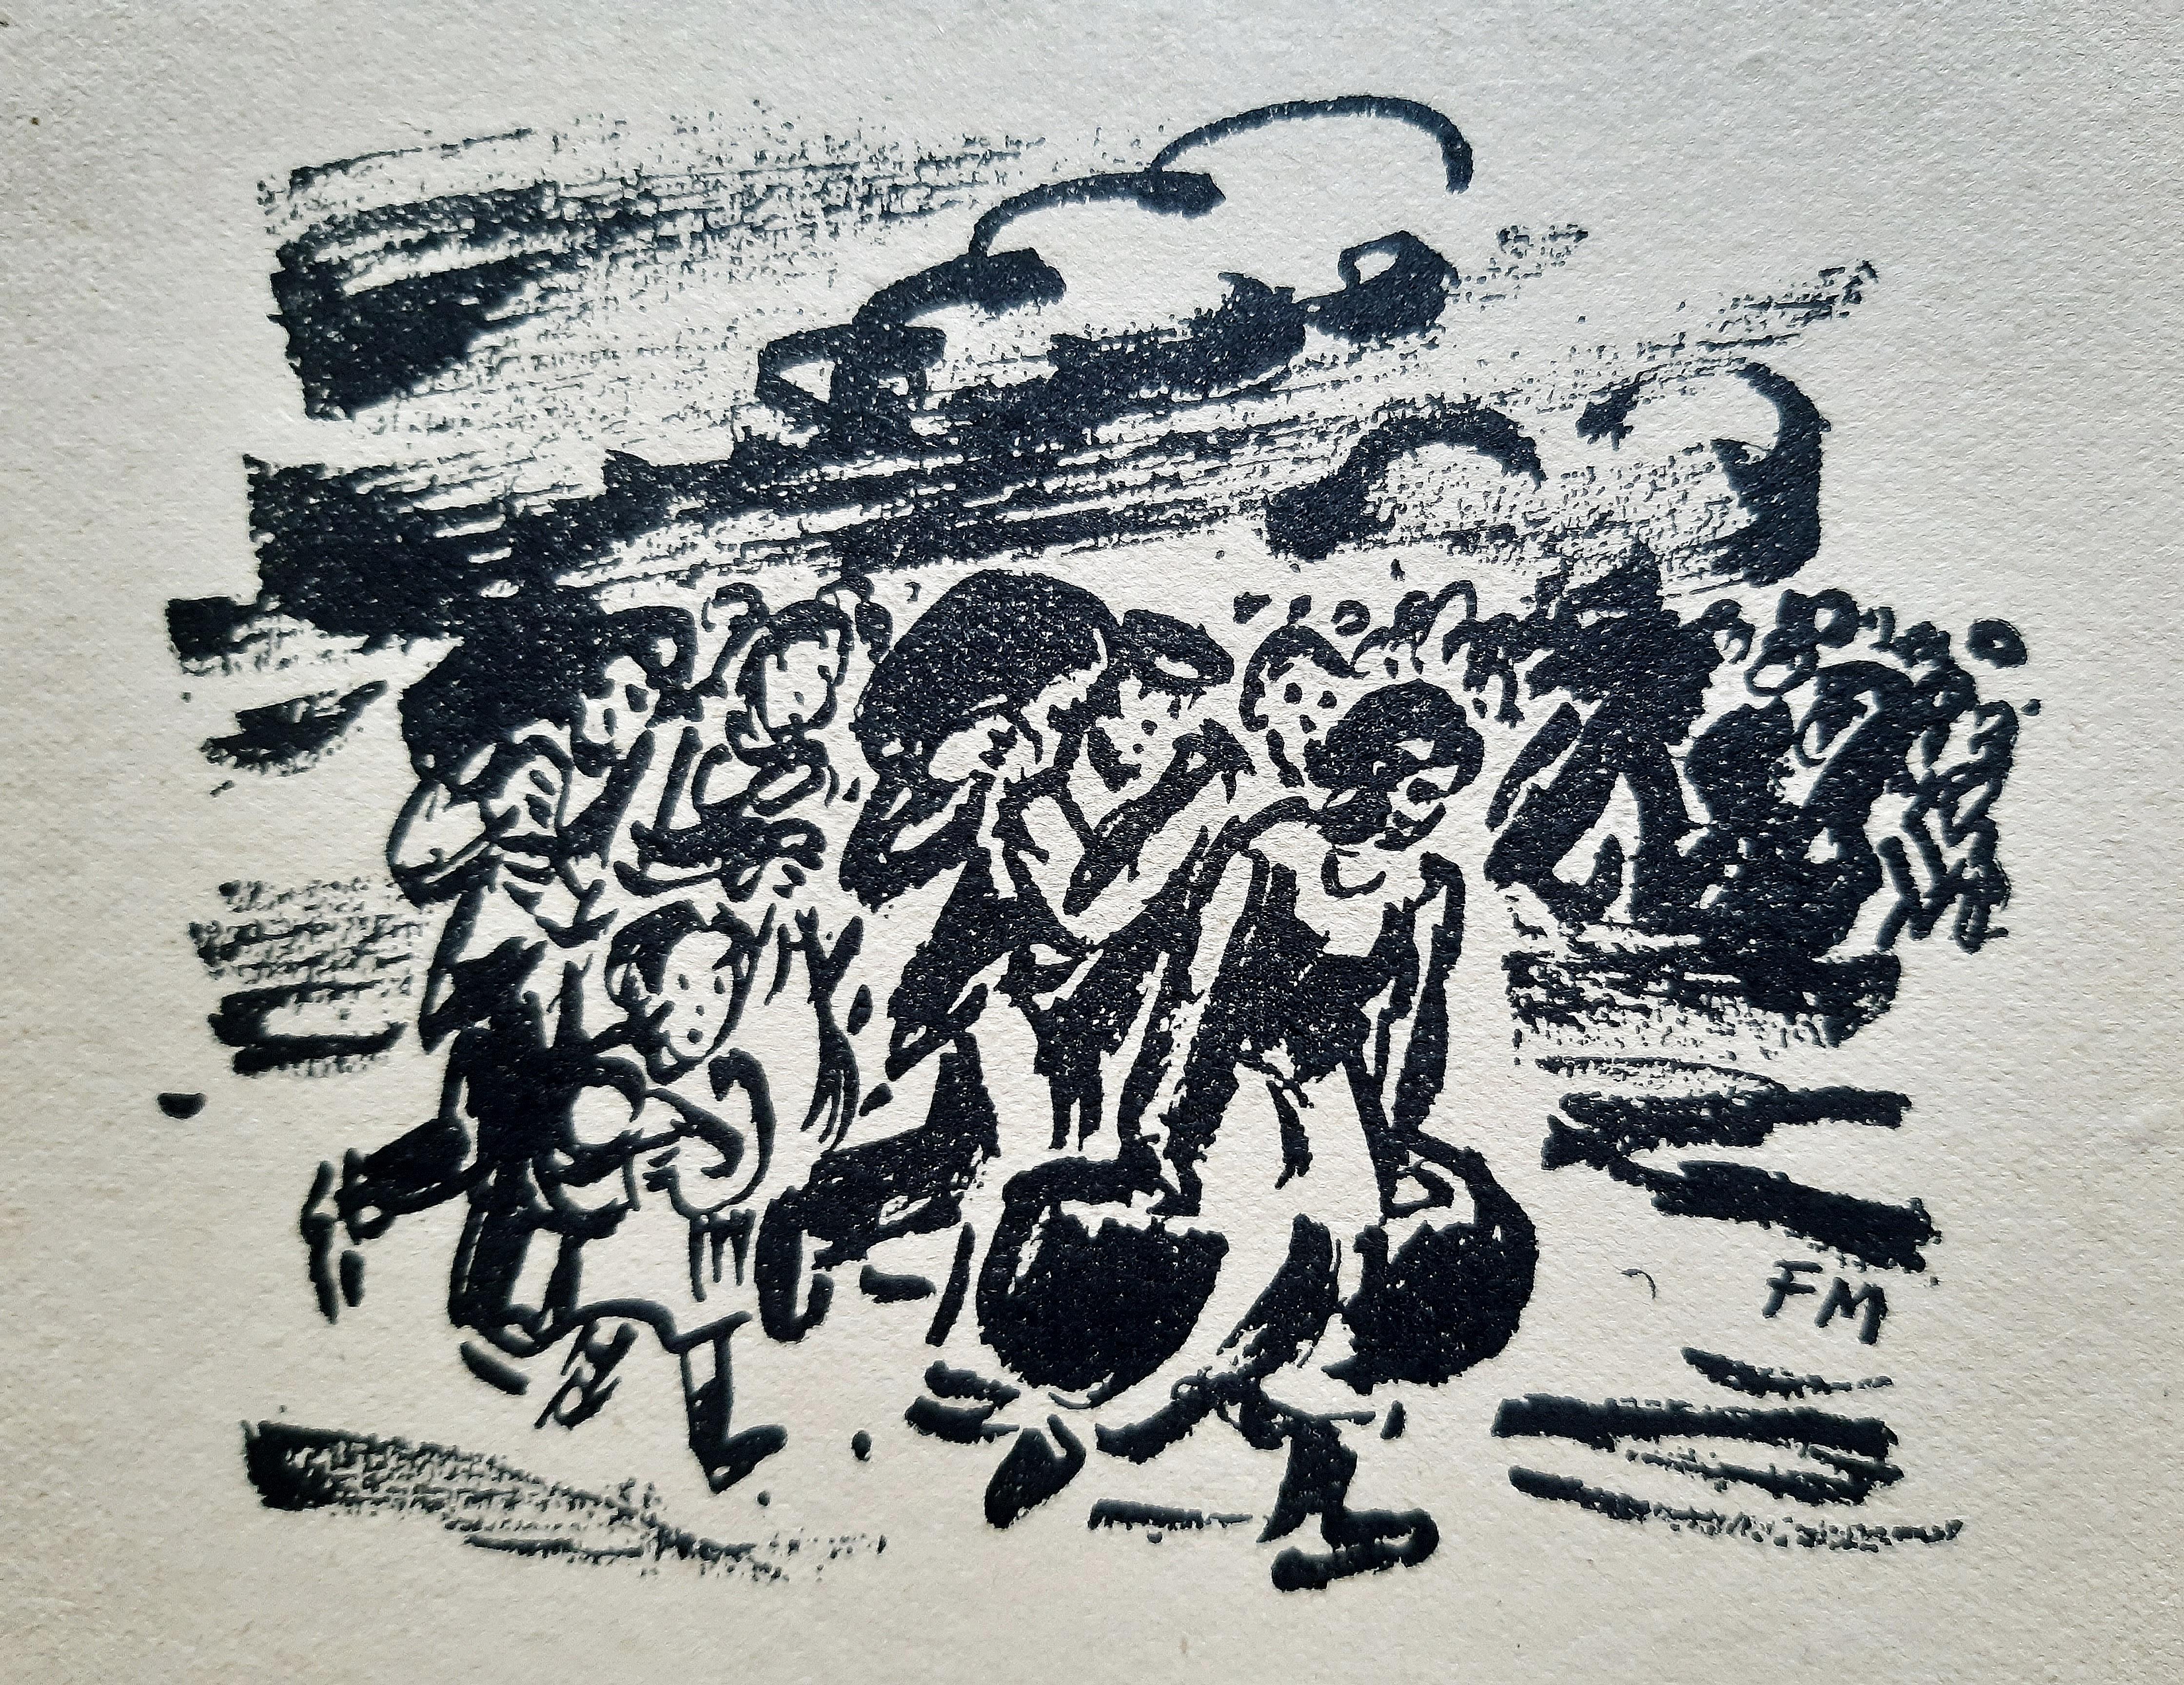 Les Réfugiés - Rare Book illustrated by André Masson - 1942 For Sale 6